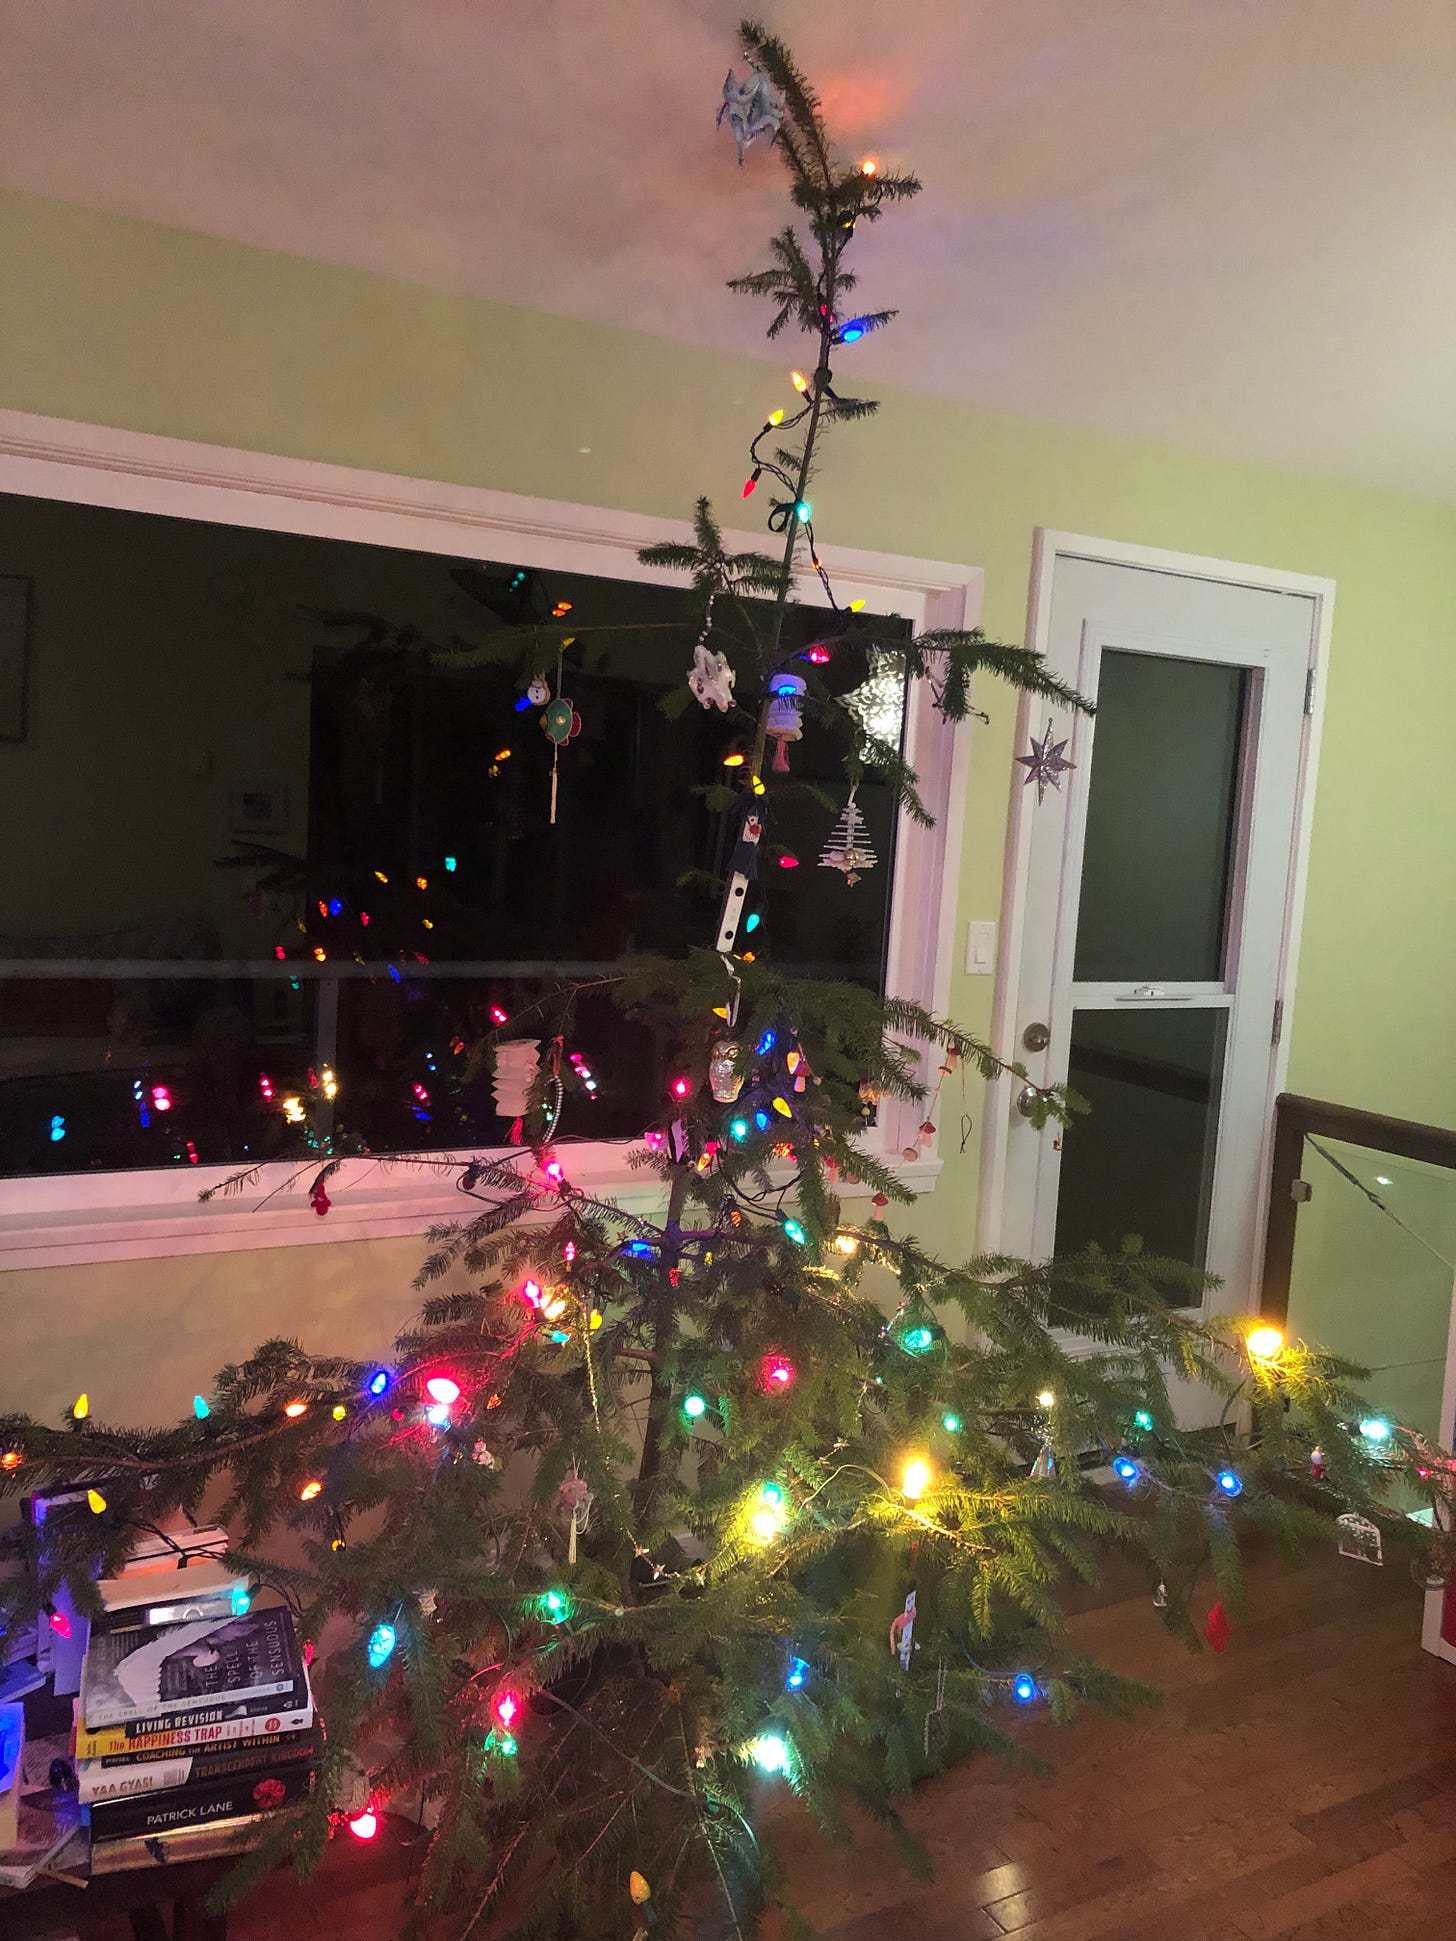 A slightly wonky Christmas tree